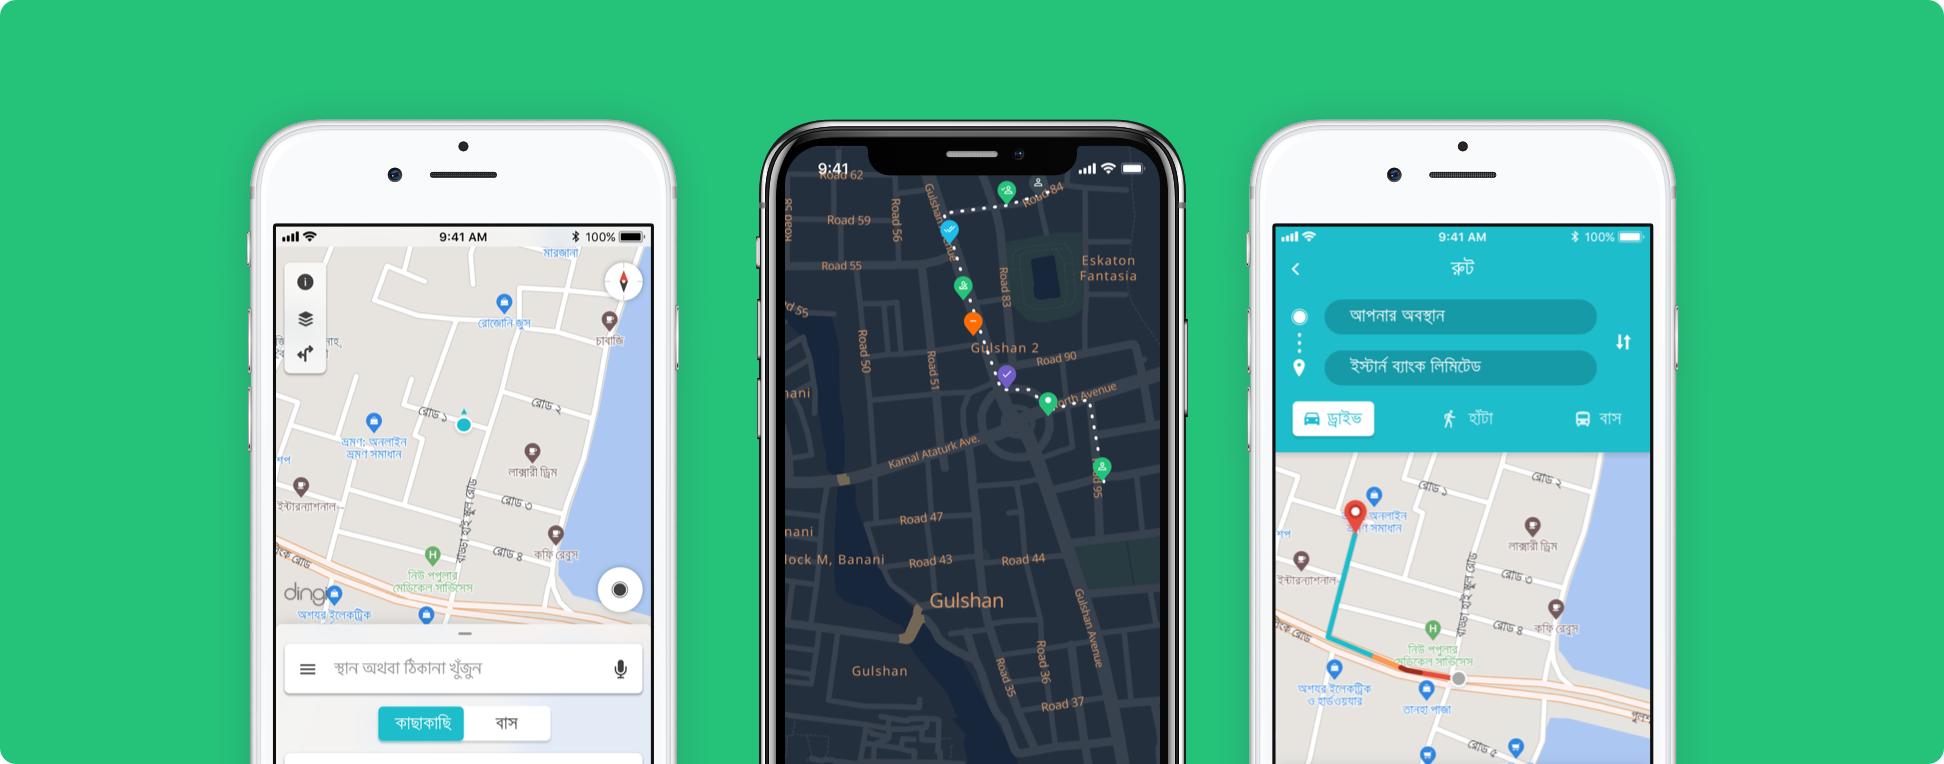 Mapbox Maps SDK for iOS screenshots